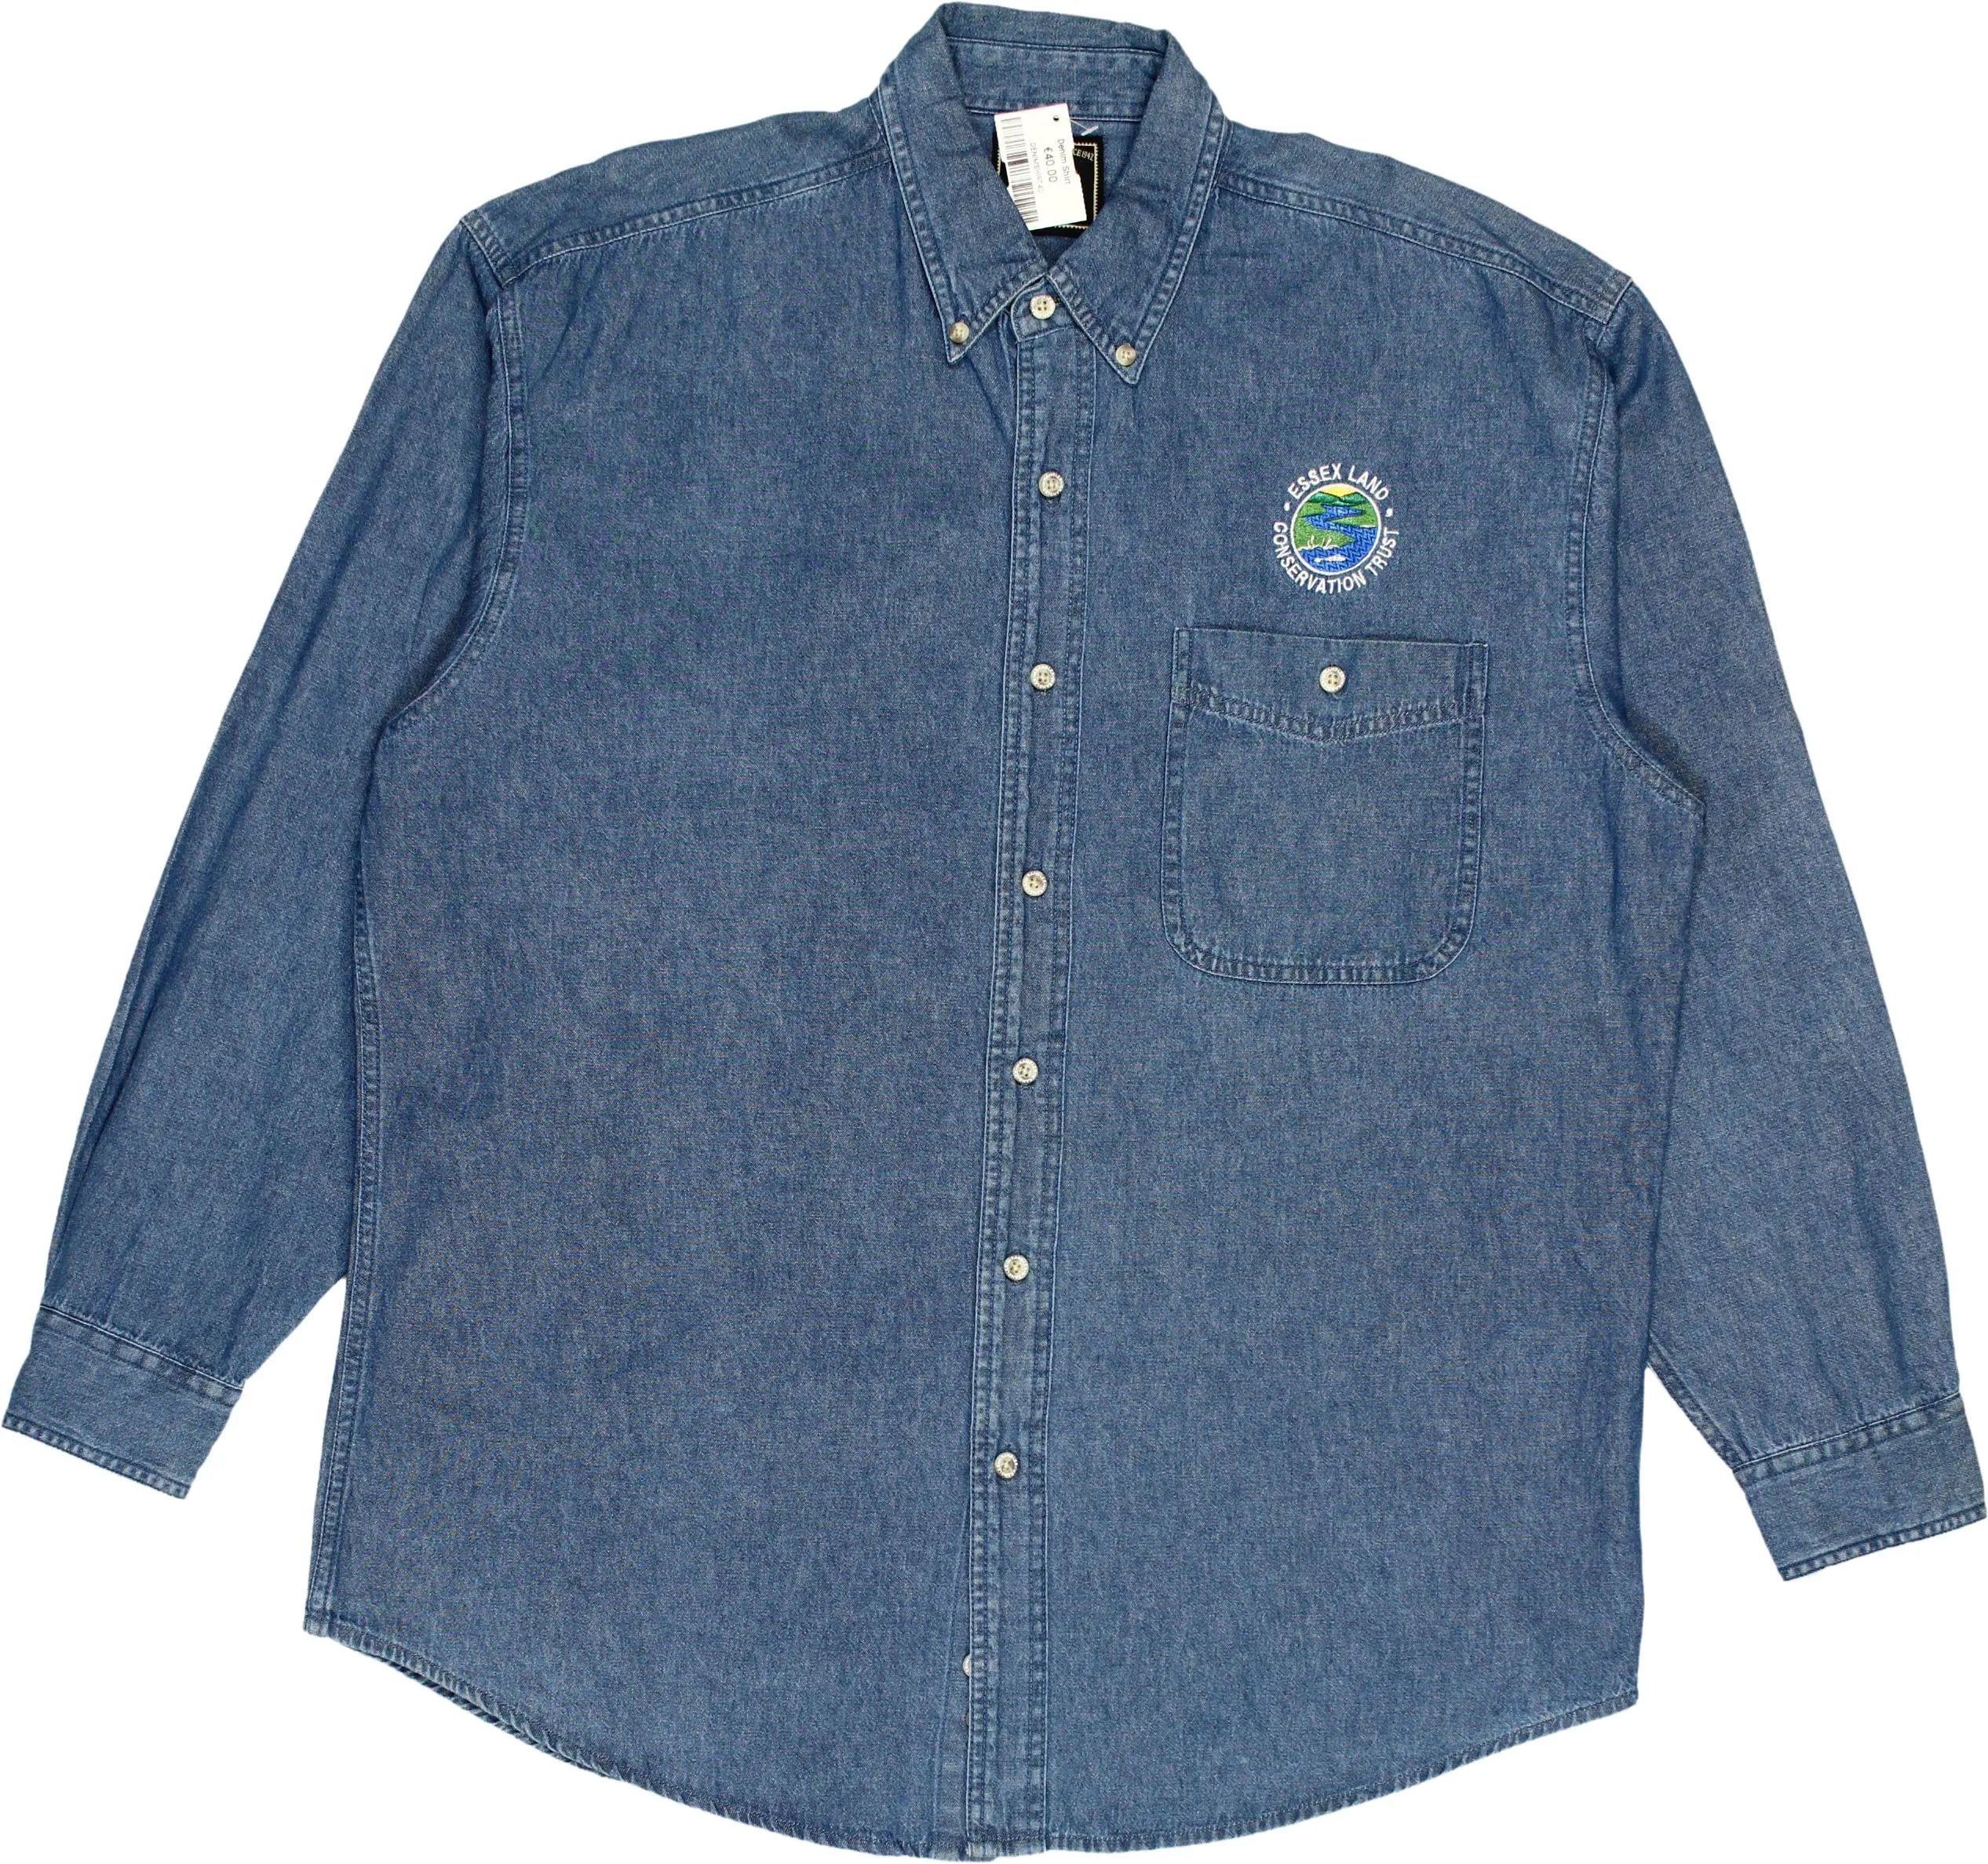 Wrangler - Denim Shirt- ThriftTale.com - Vintage and second handclothing